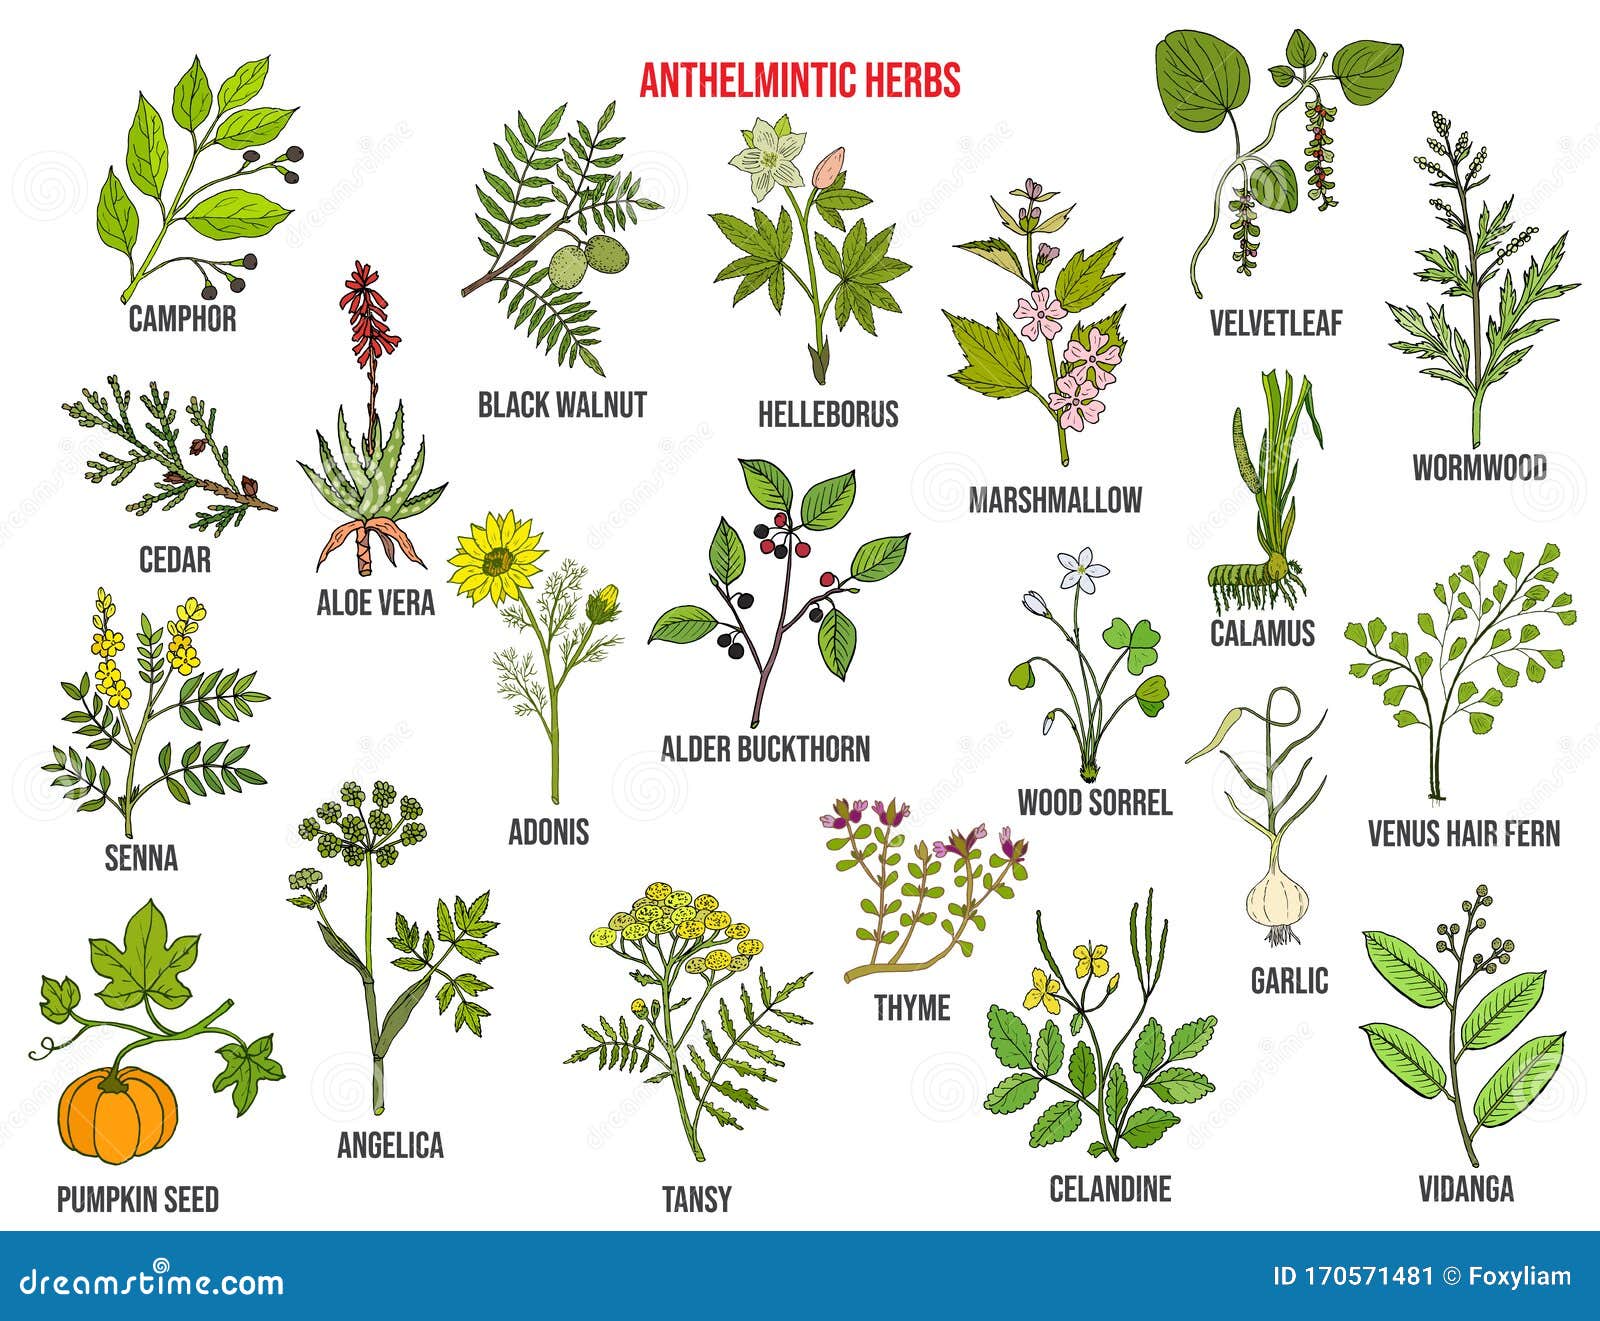 anthelmintic herbs